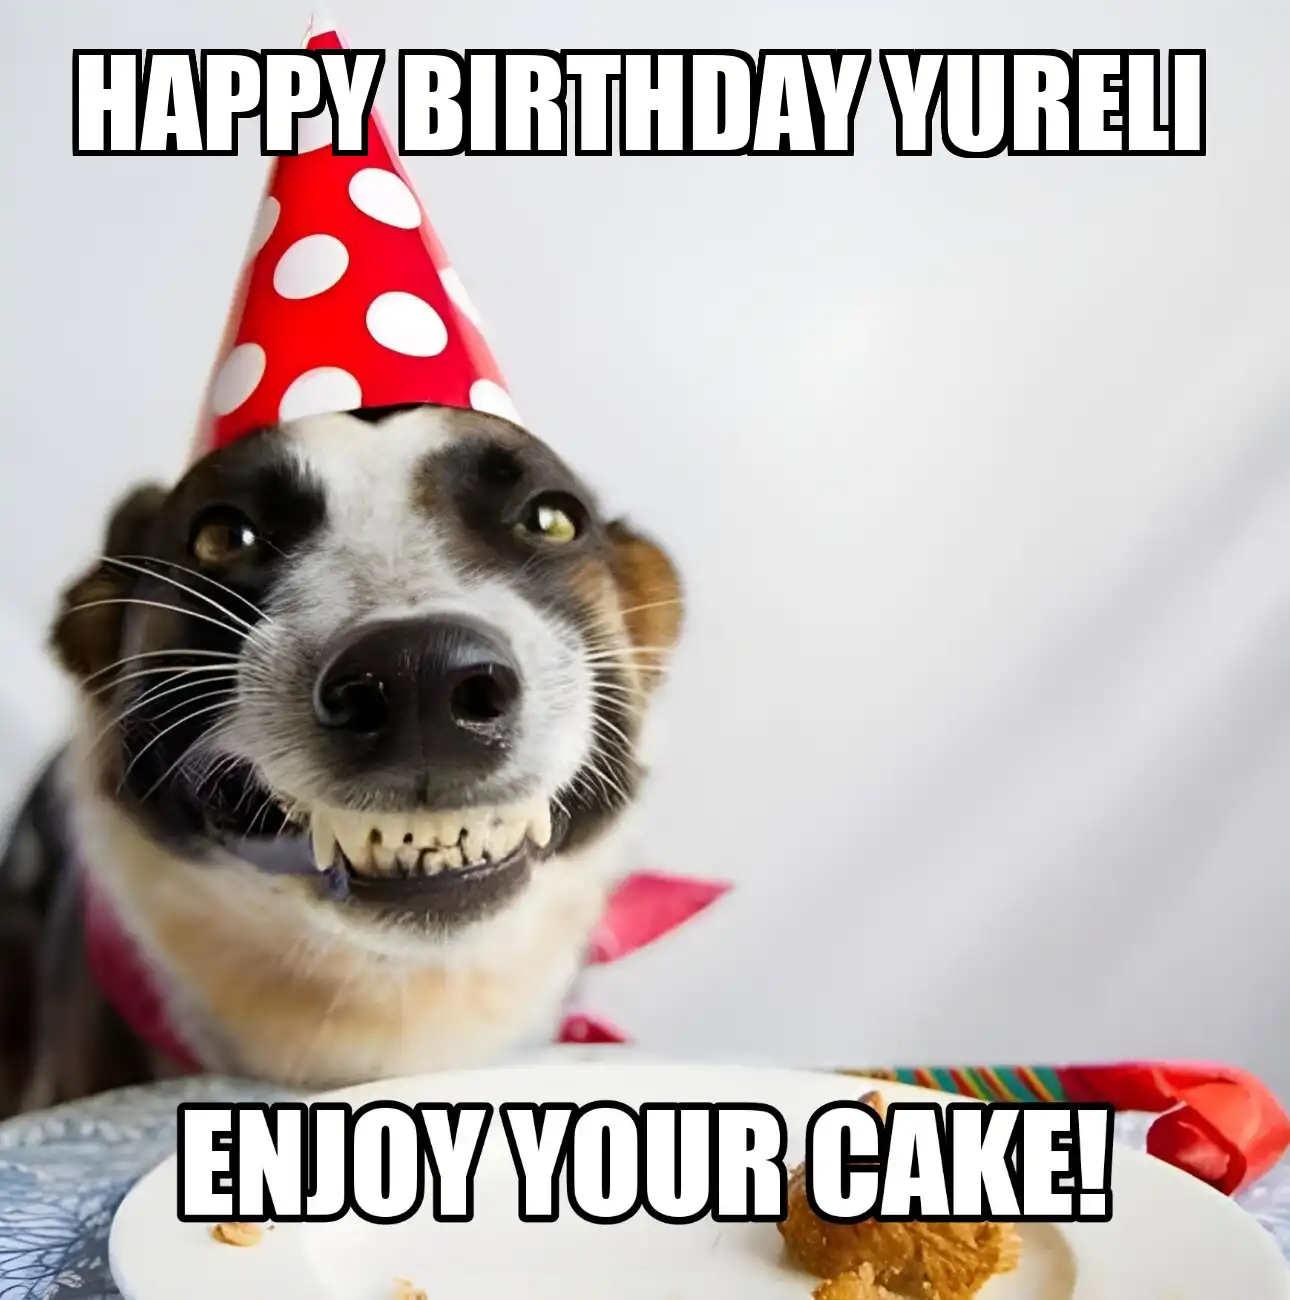 Happy Birthday Yureli Enjoy Your Cake Dog Meme